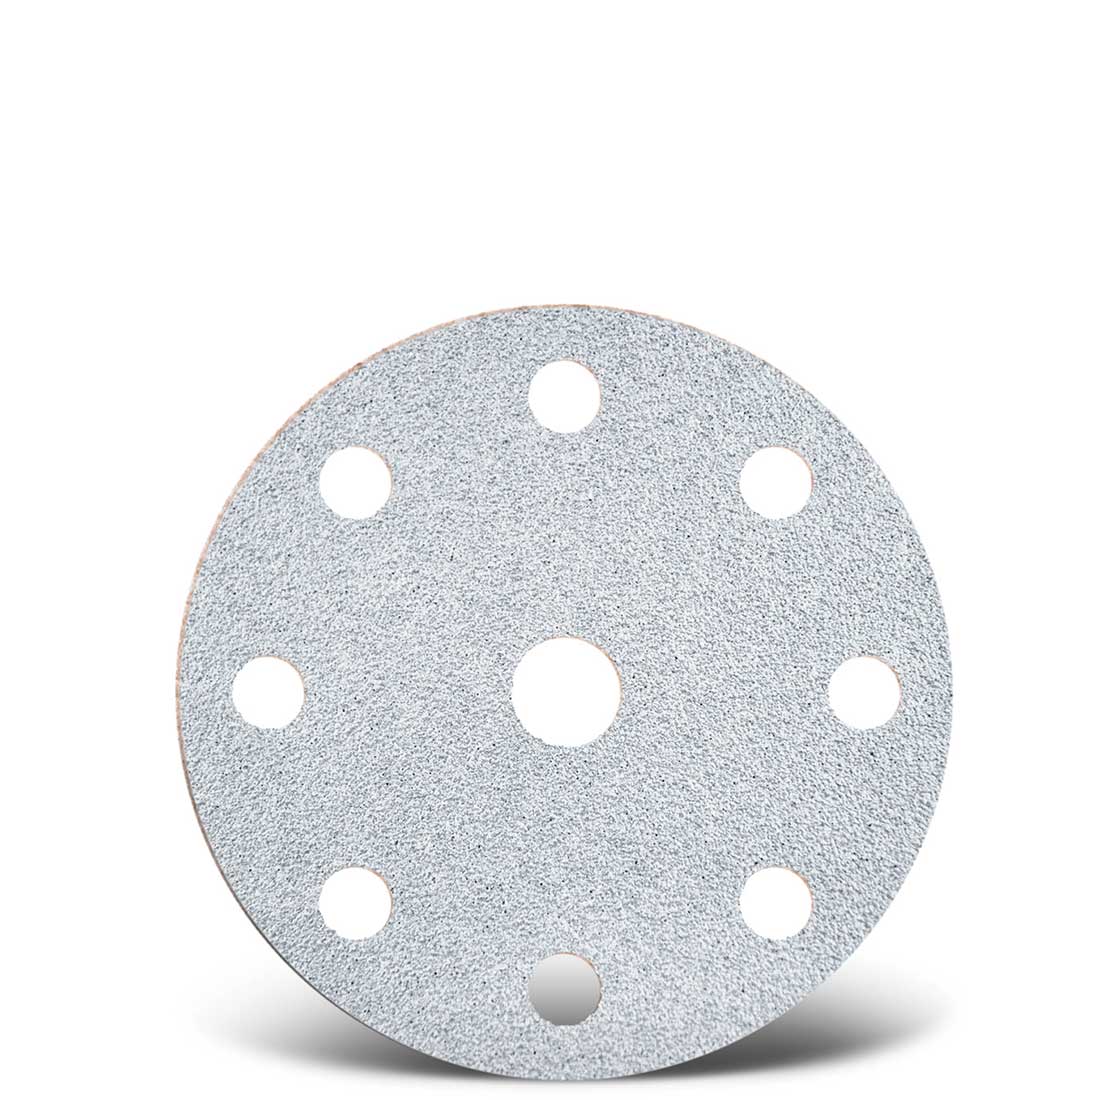 MENZER hook & loop sanding discs for random orbital sanders, G40–400, Ø 150 mm / 9 hole / stearated aluminium oxide